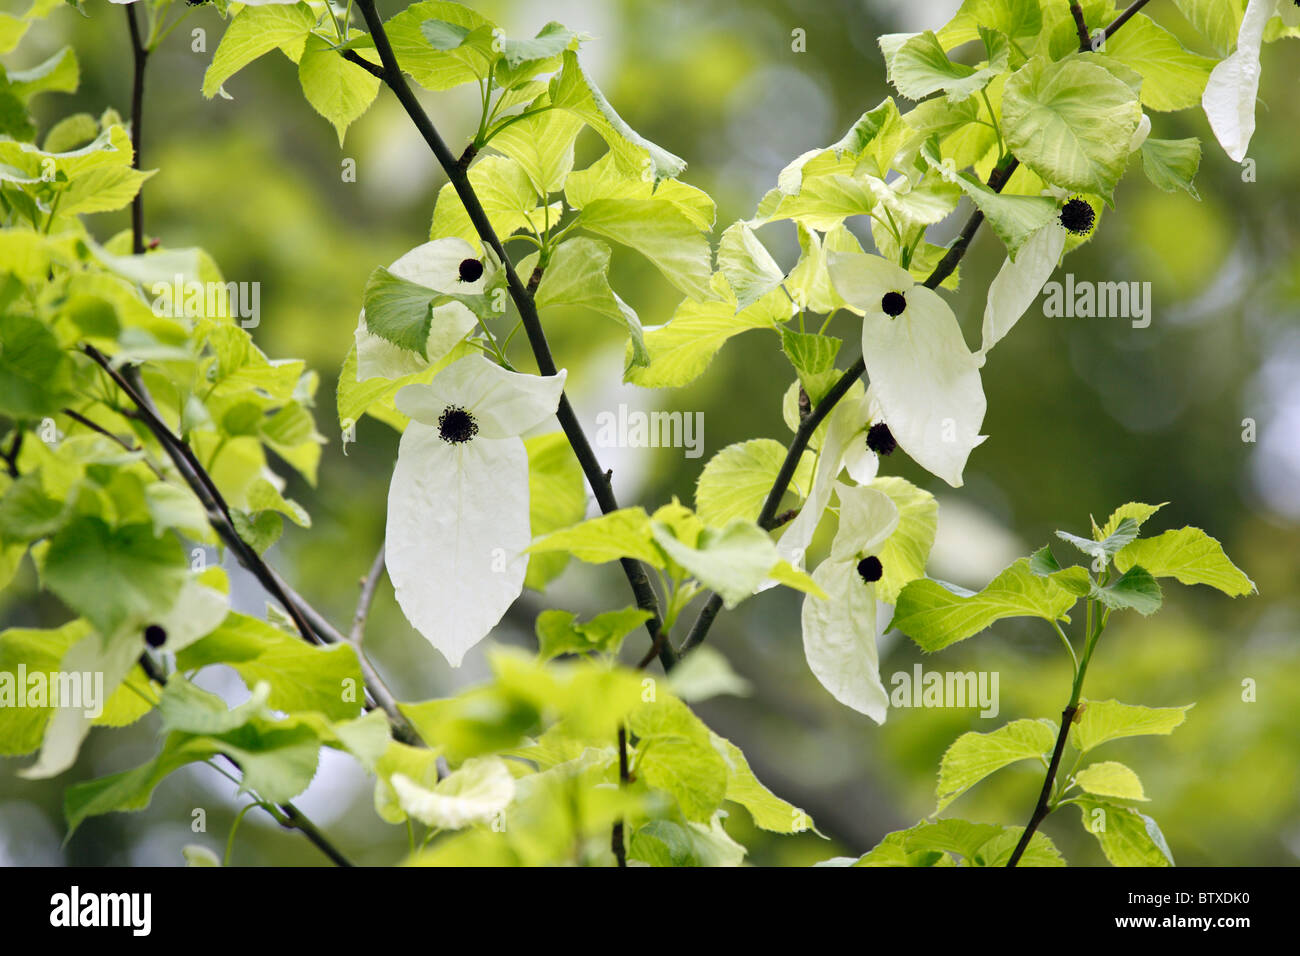 Hankerchief or Dove Tree (Davidia involucrata), showing flower petals or bracts, Germany Stock Photo